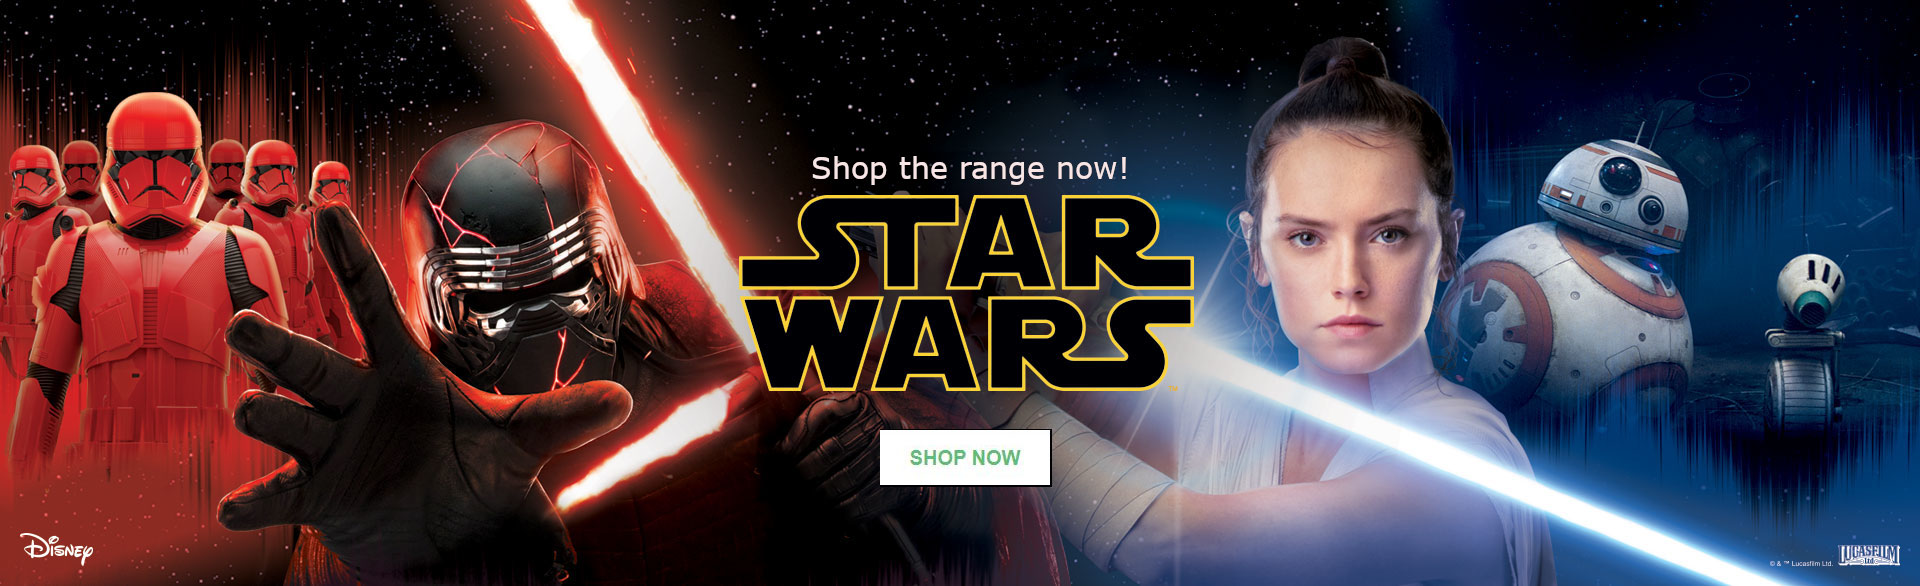 Shop the Star Wars range now